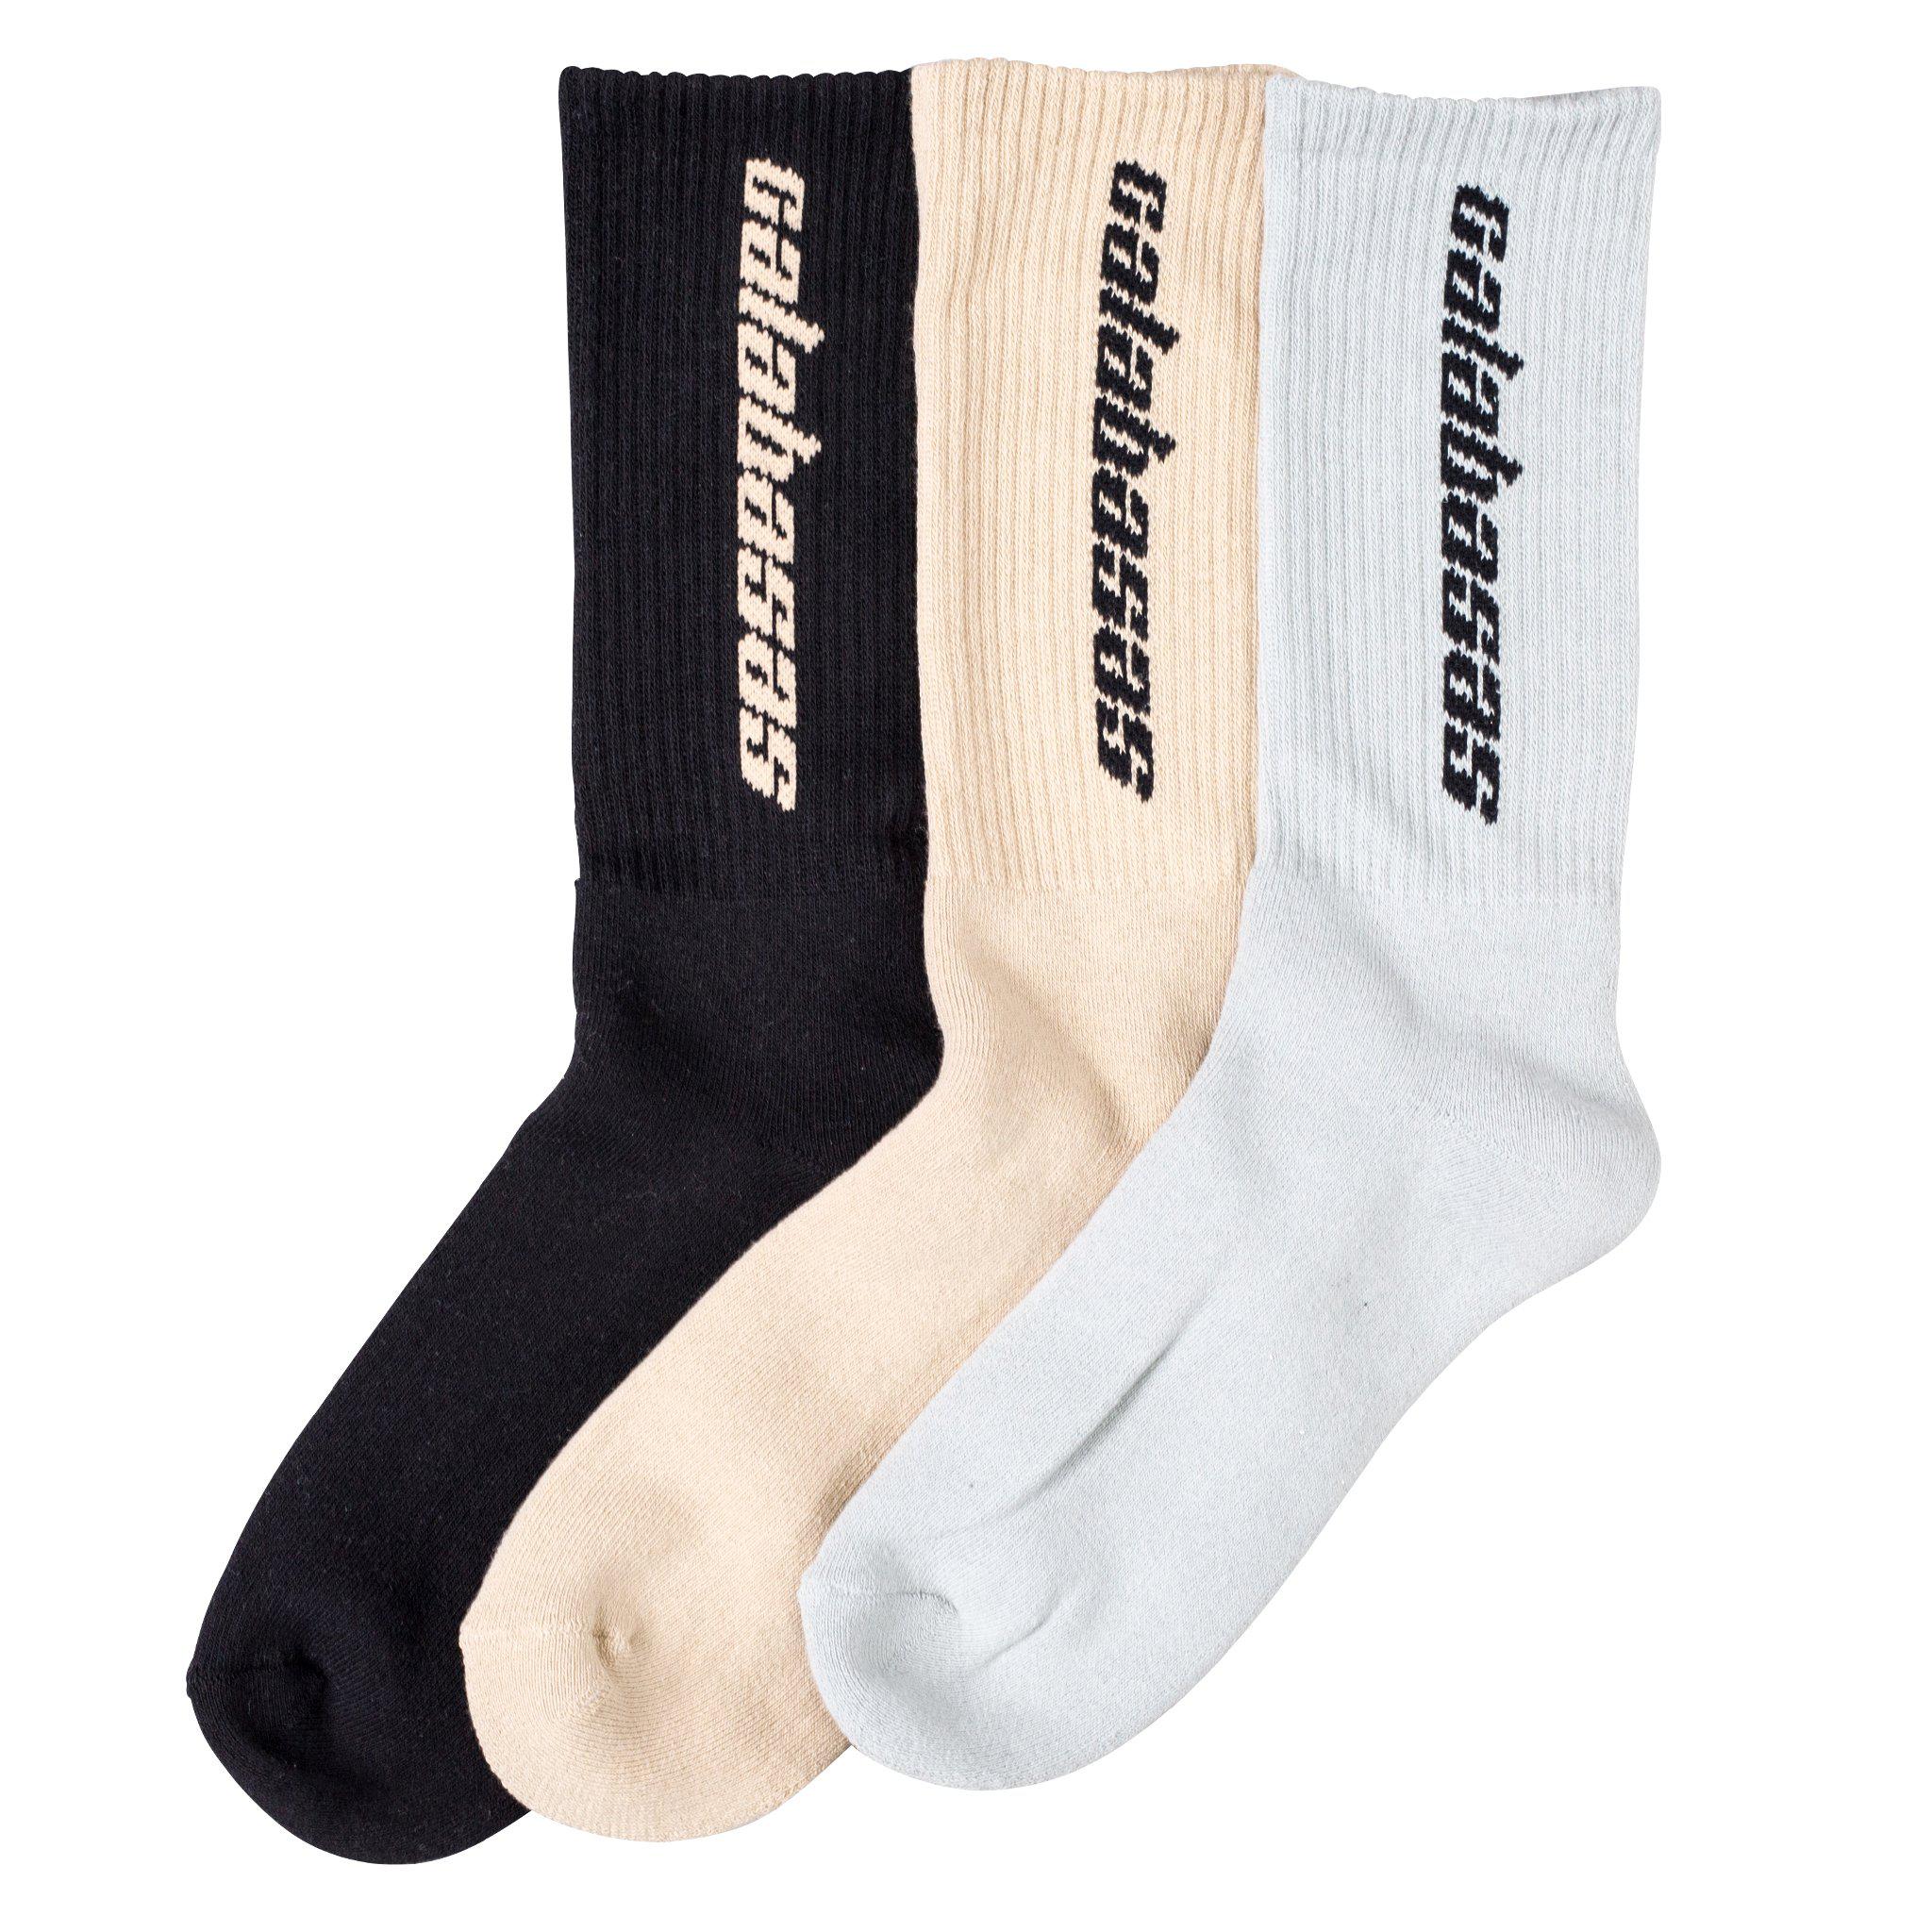 Yeezy 'calabasas' Socks (3 Pack) for 